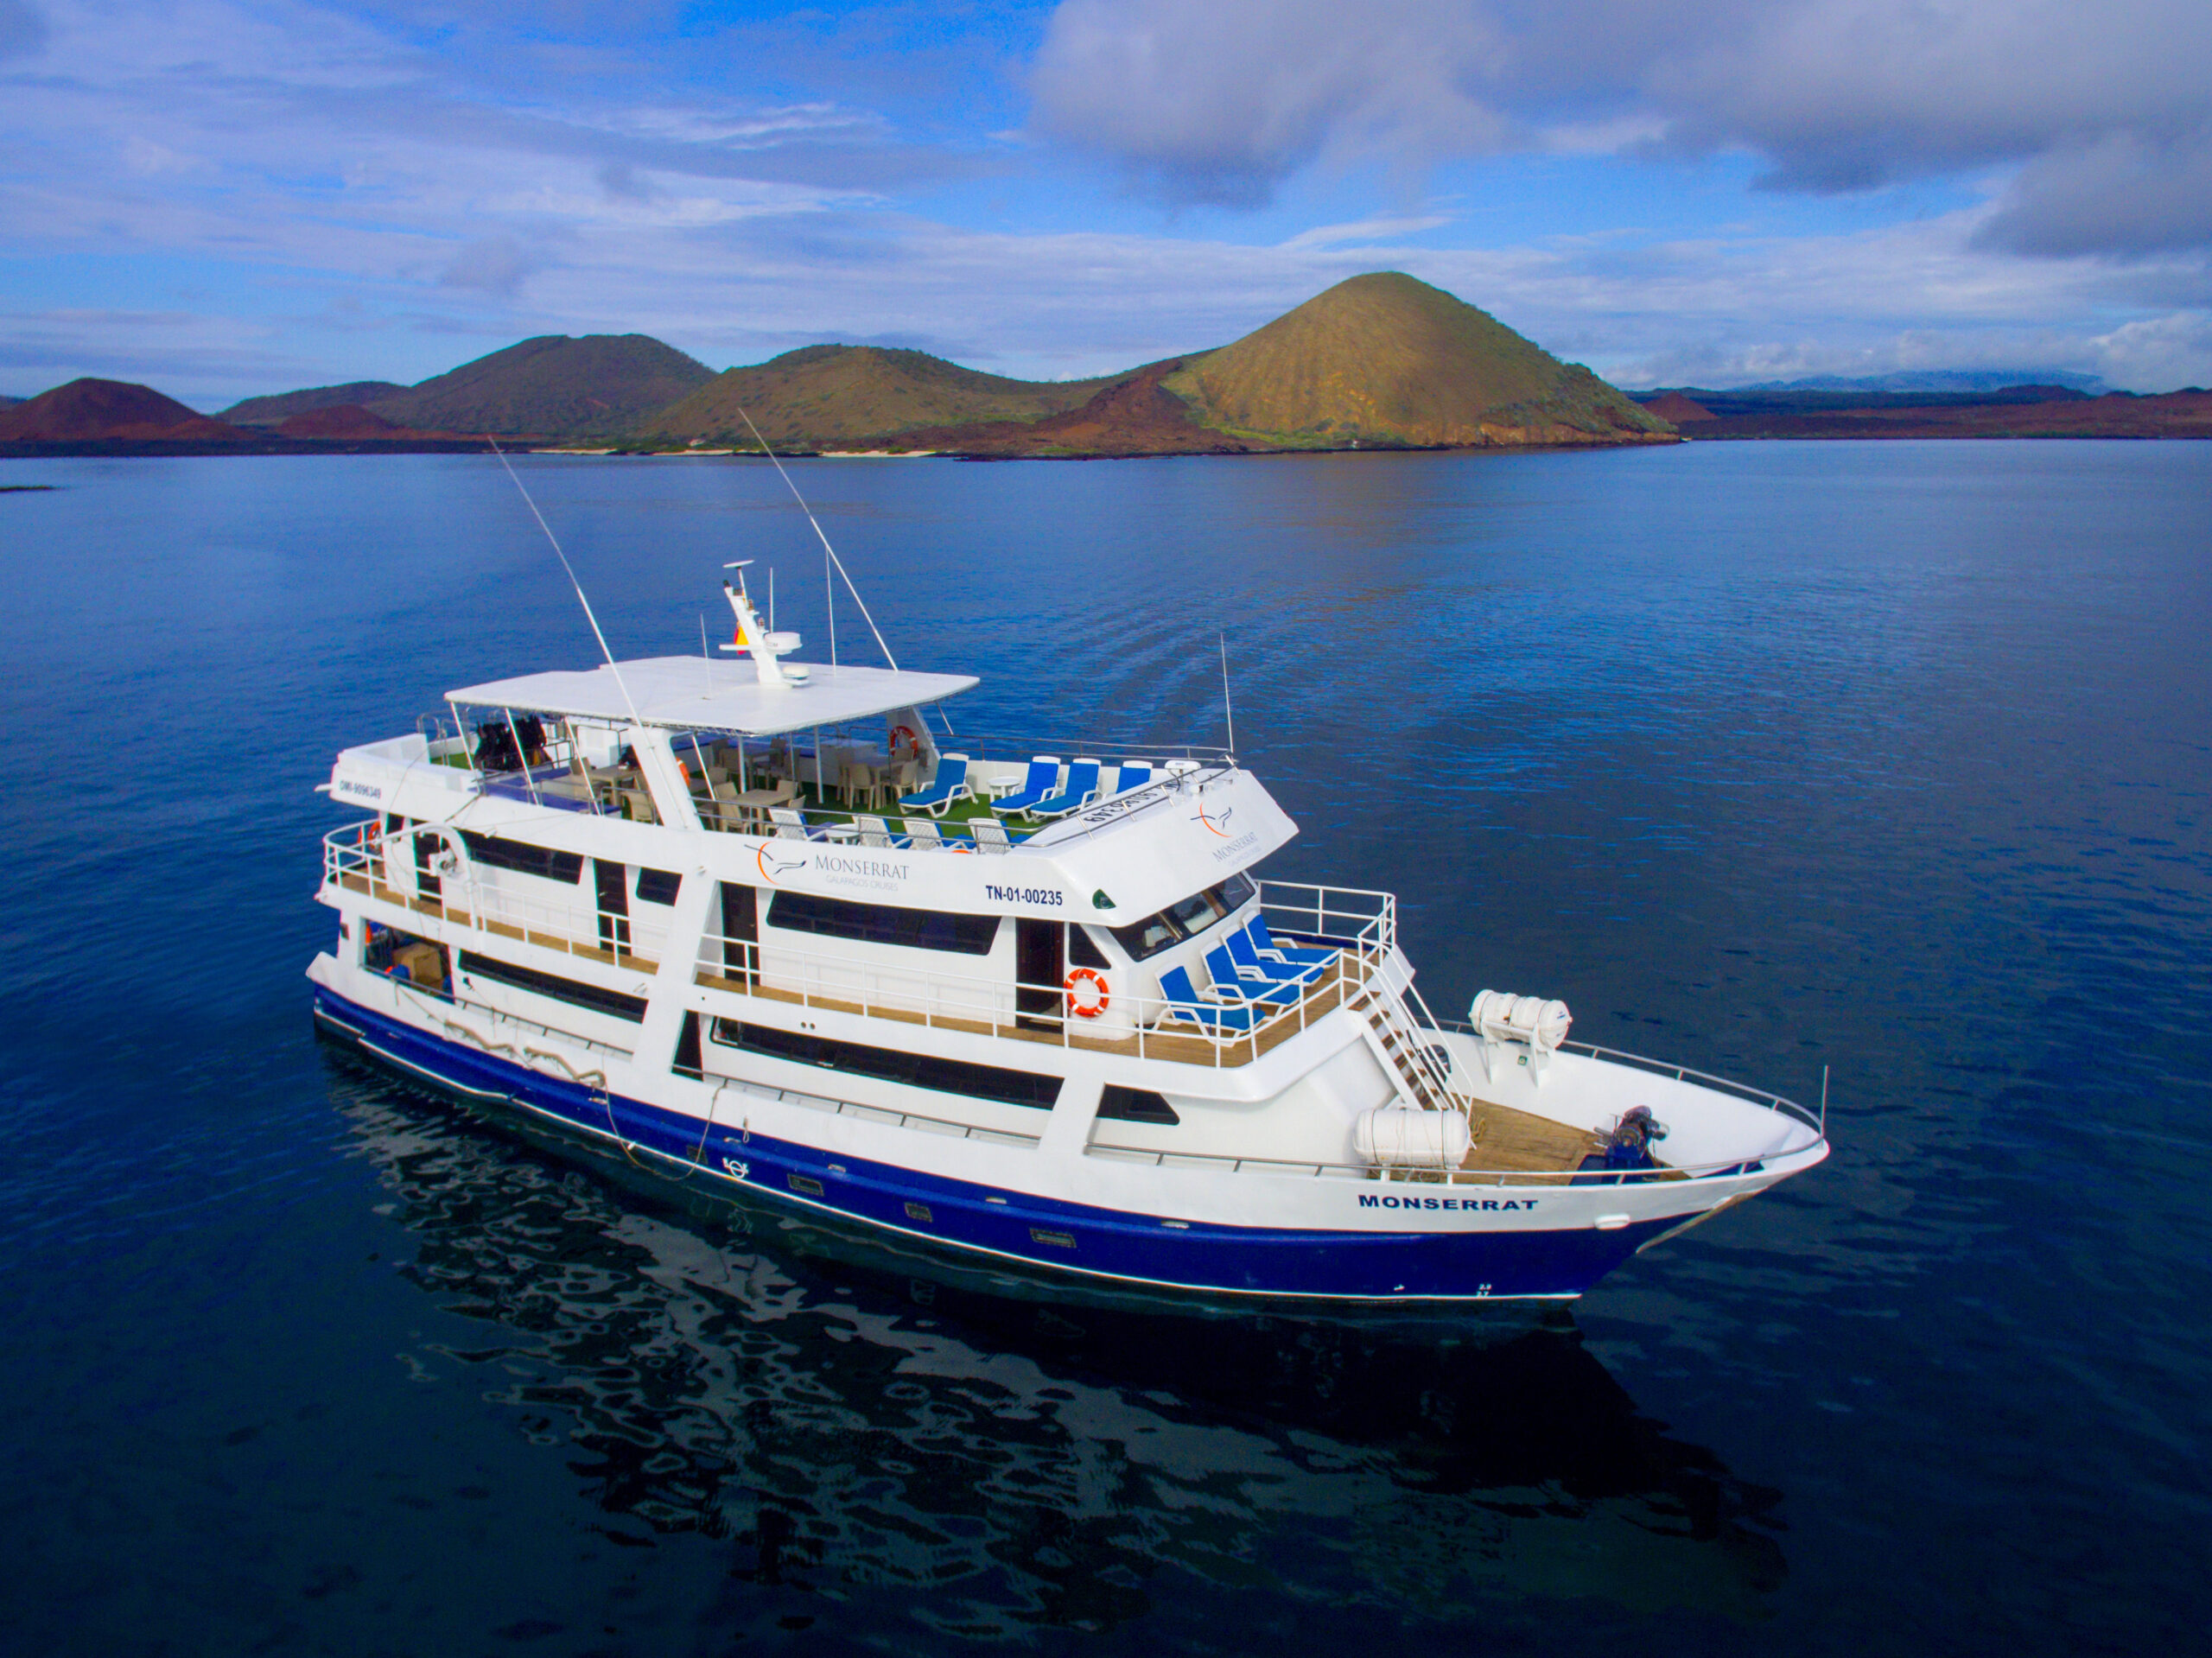 Monserrat Galapagos Cruises Panoramic 2021 14 scaled